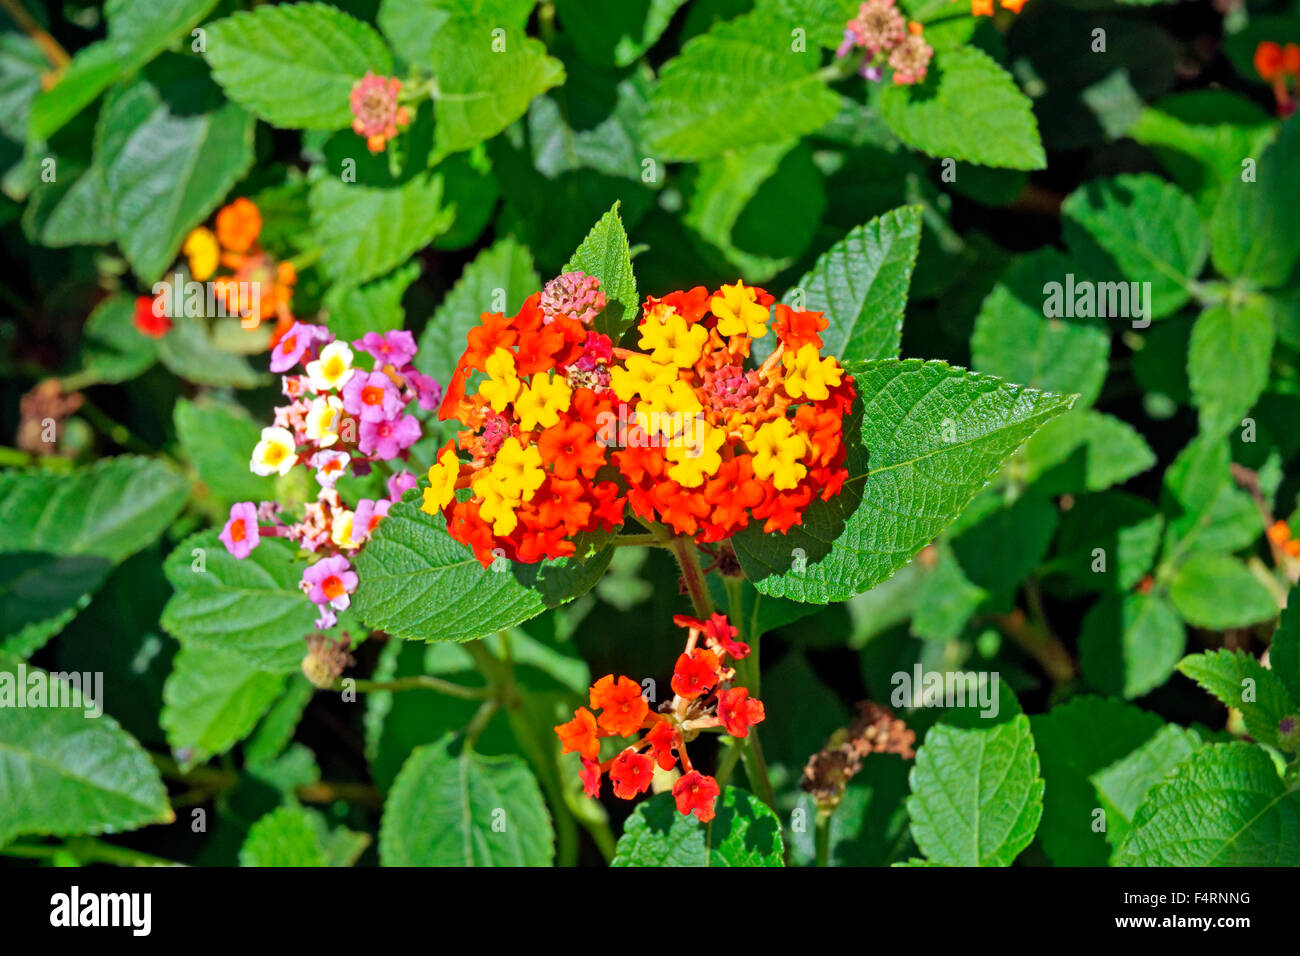 Europe, Spain, Alicante, Lantana Camara, little change rose, blossoms, flowers, plants, shrub, bush, Stock Photo